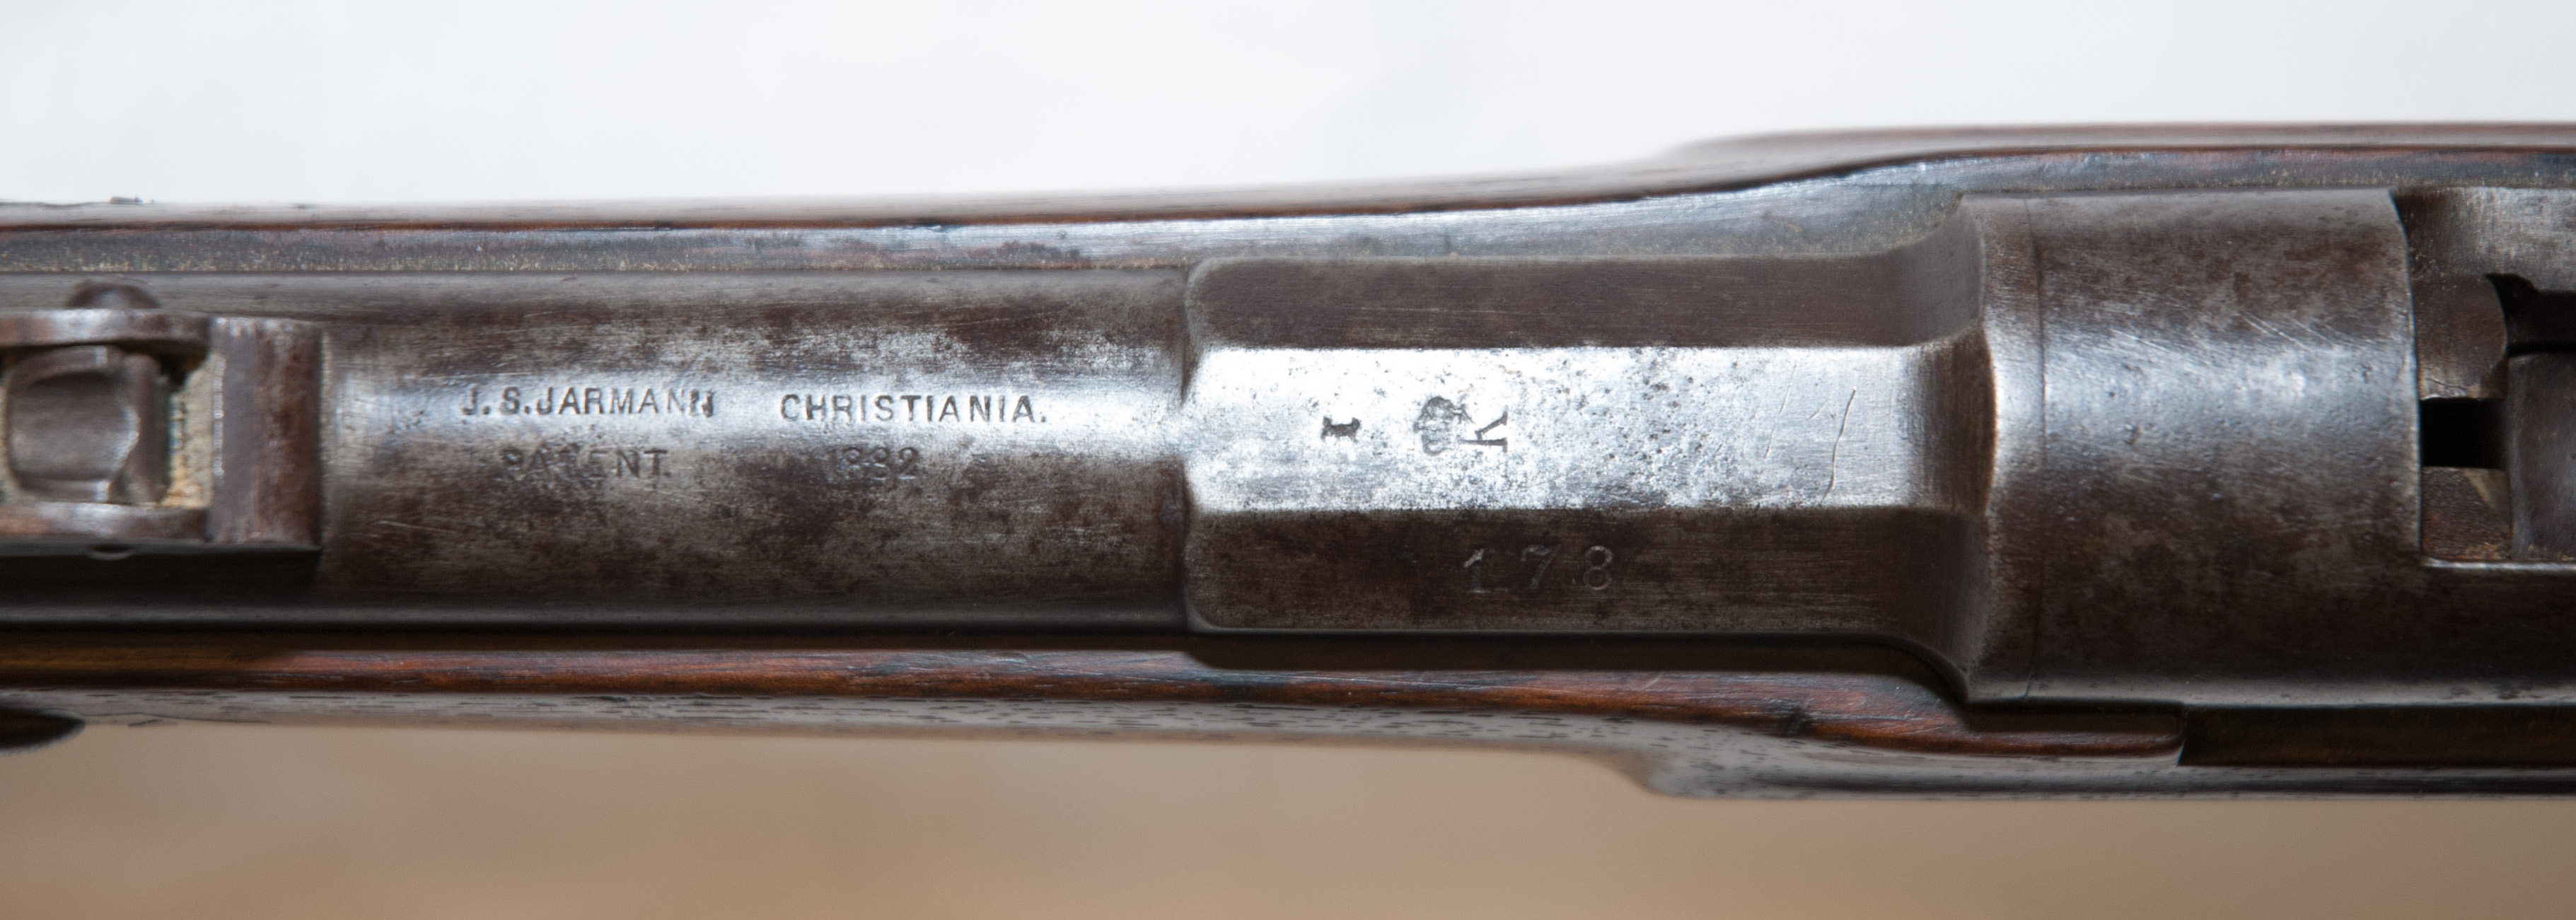 ./guns/rifle/bilder/Rifle-Kongsberg-Jarmann-M1884-Sivil-178-8.jpg